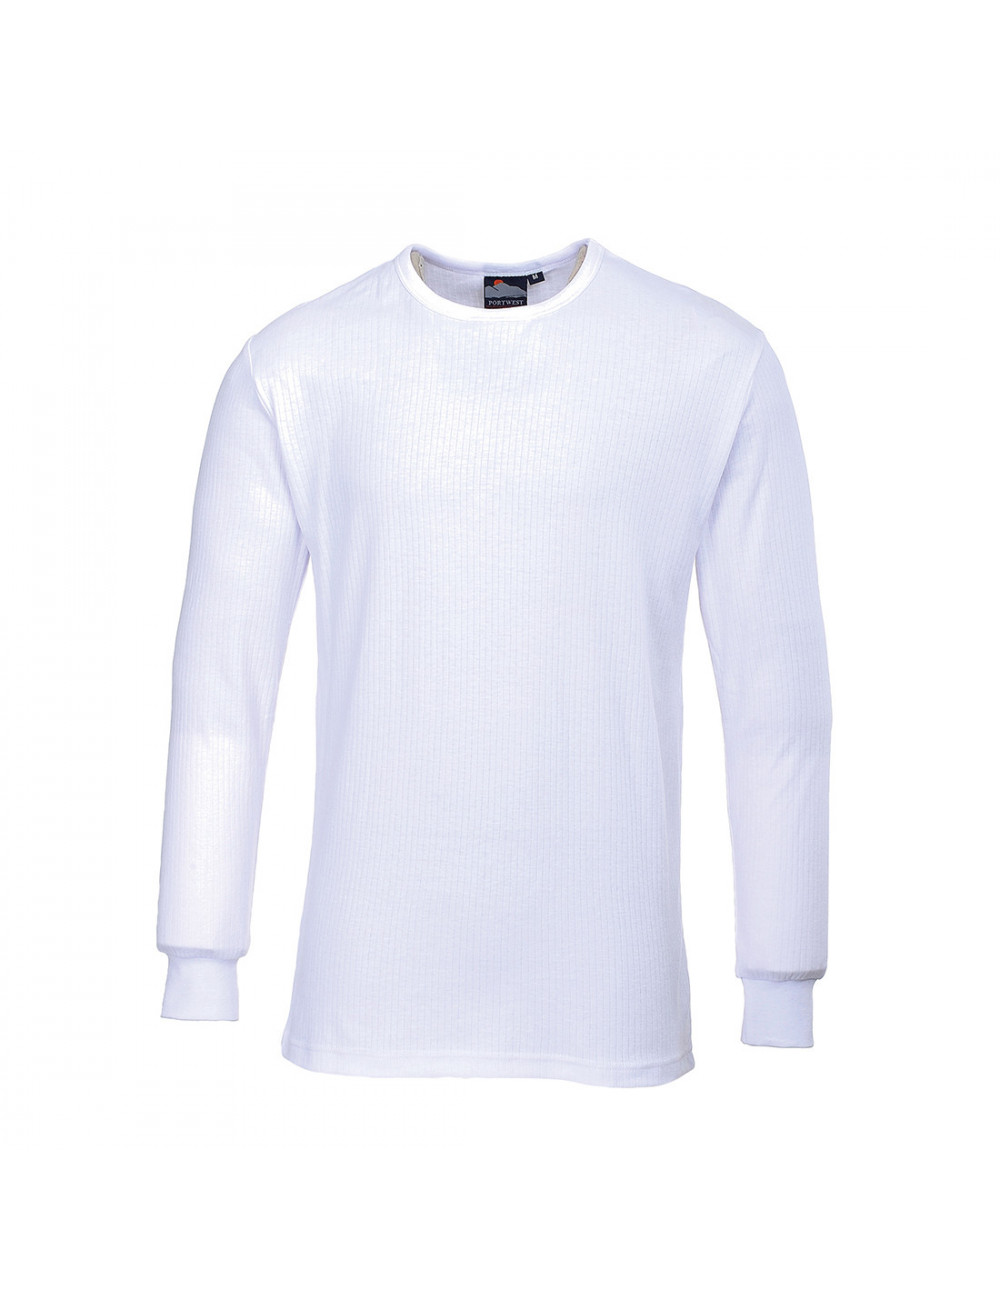 Long sleeve t-shirt white Portwest